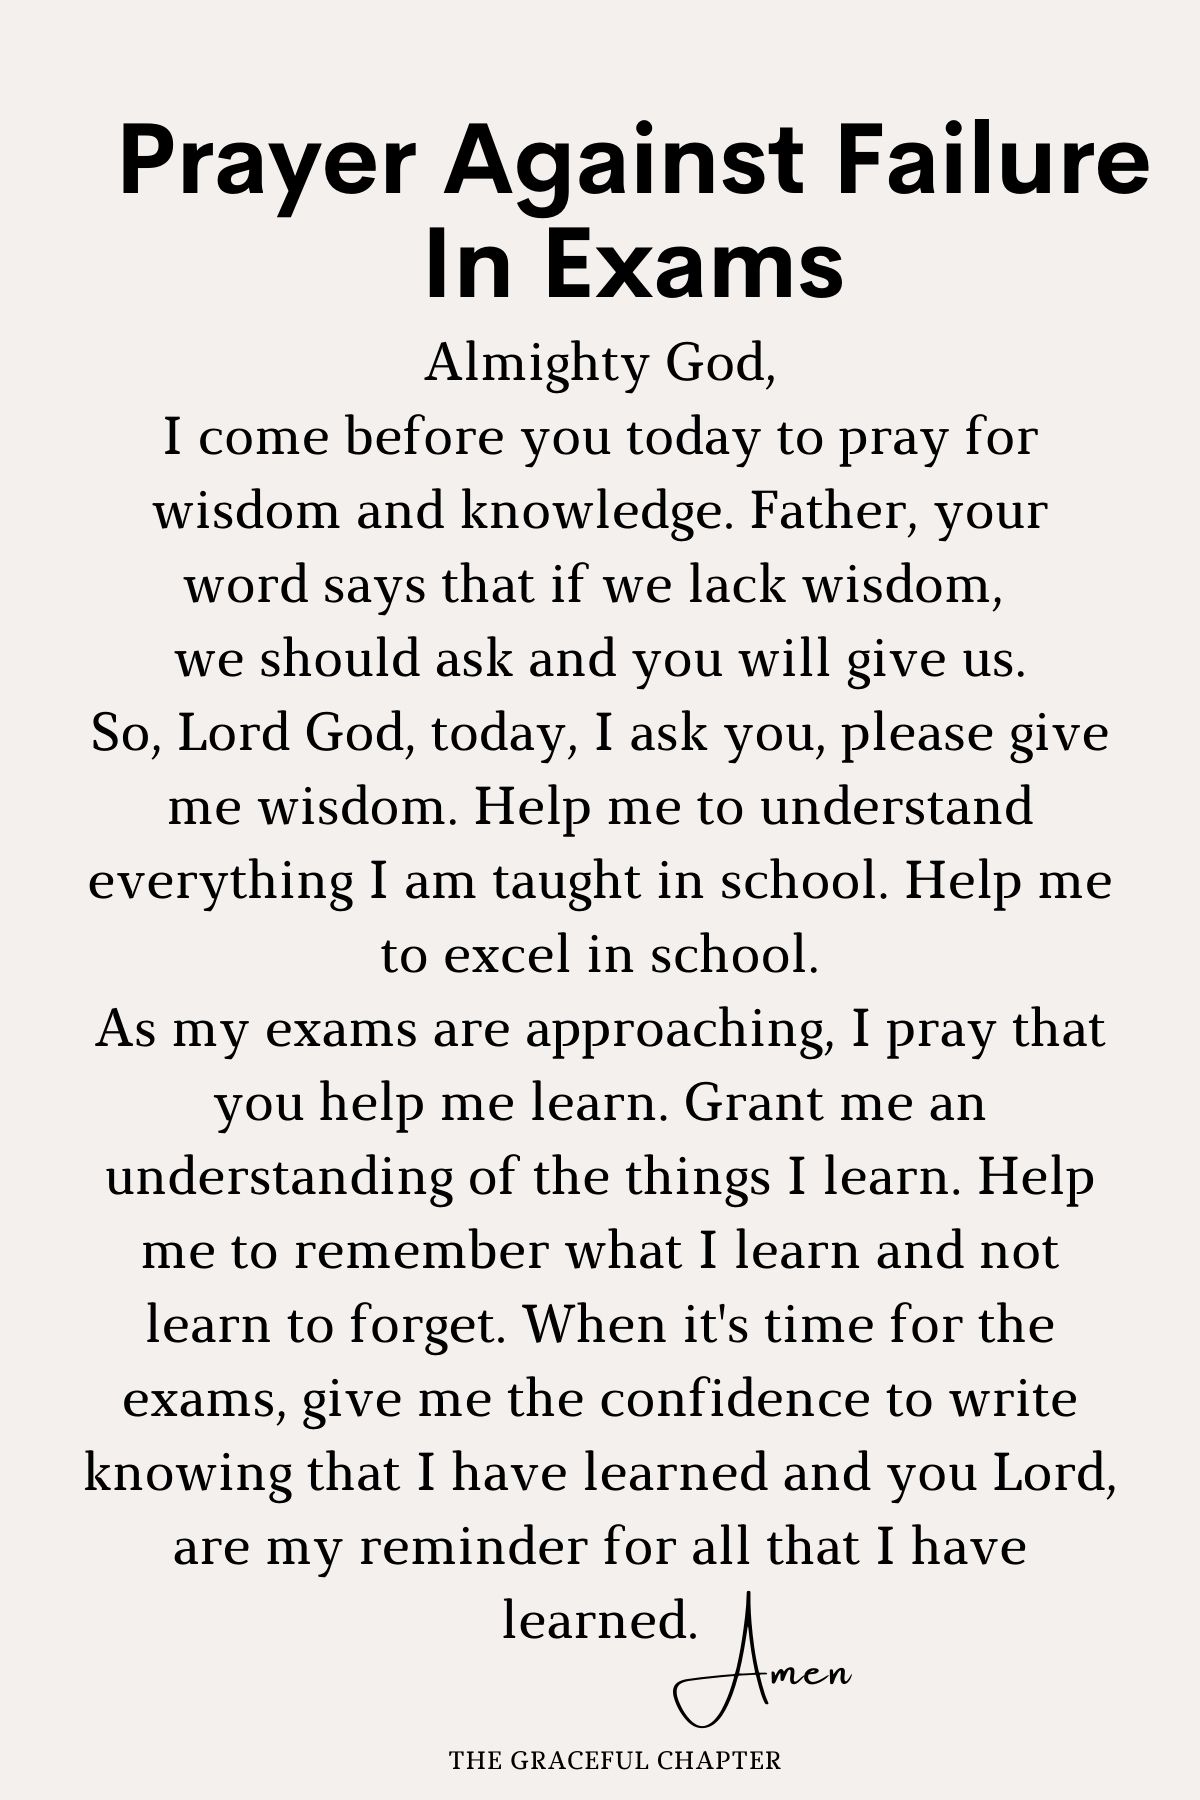 Prayer against failure in exams